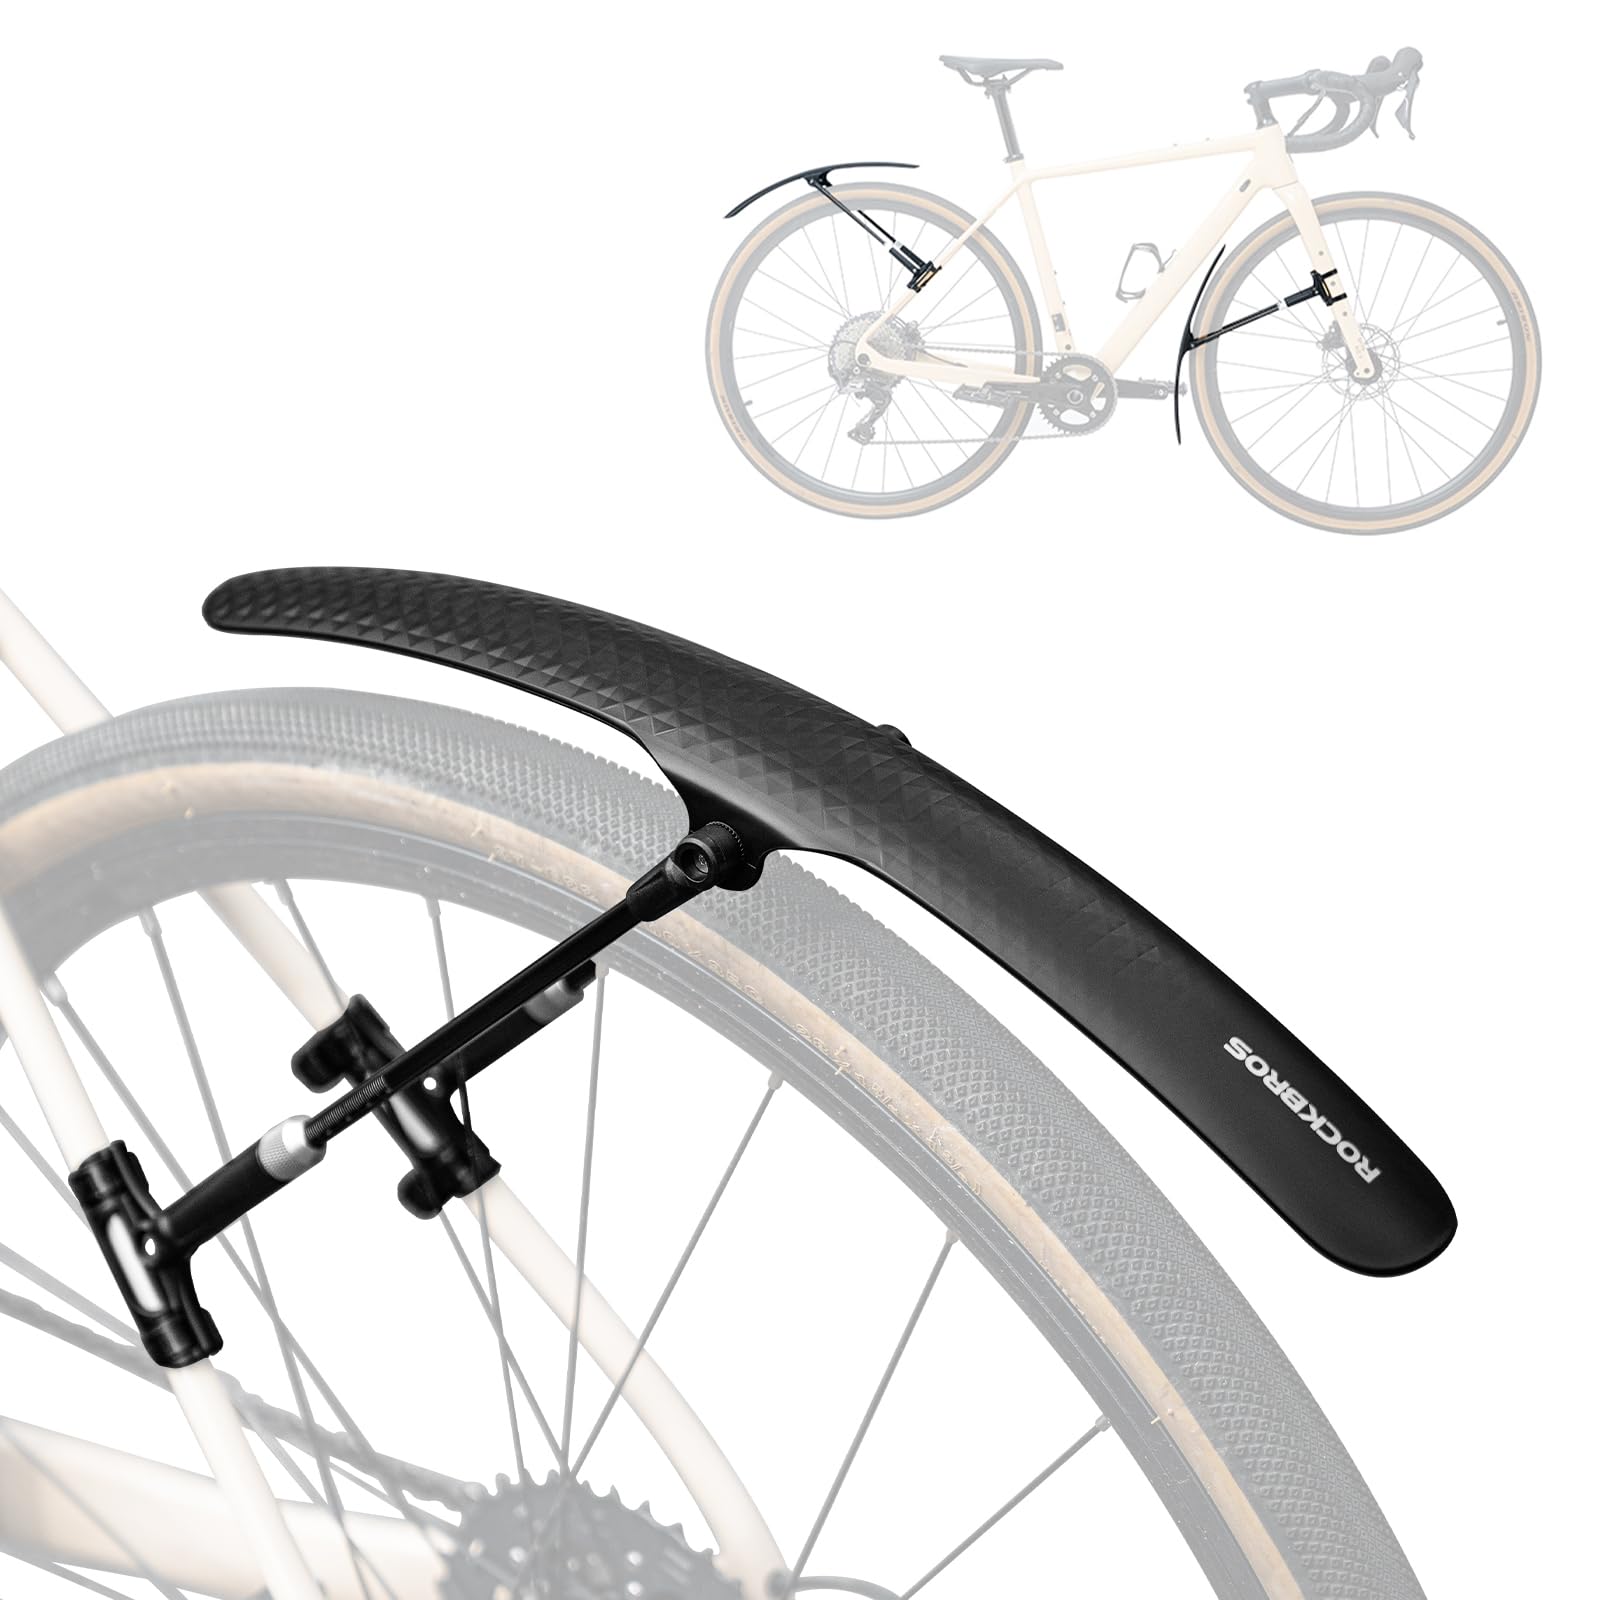 ROCKBROS Road Bike Fenders Set Adjustable Quick Release Bicycle Mudguard #Style_1 Piece